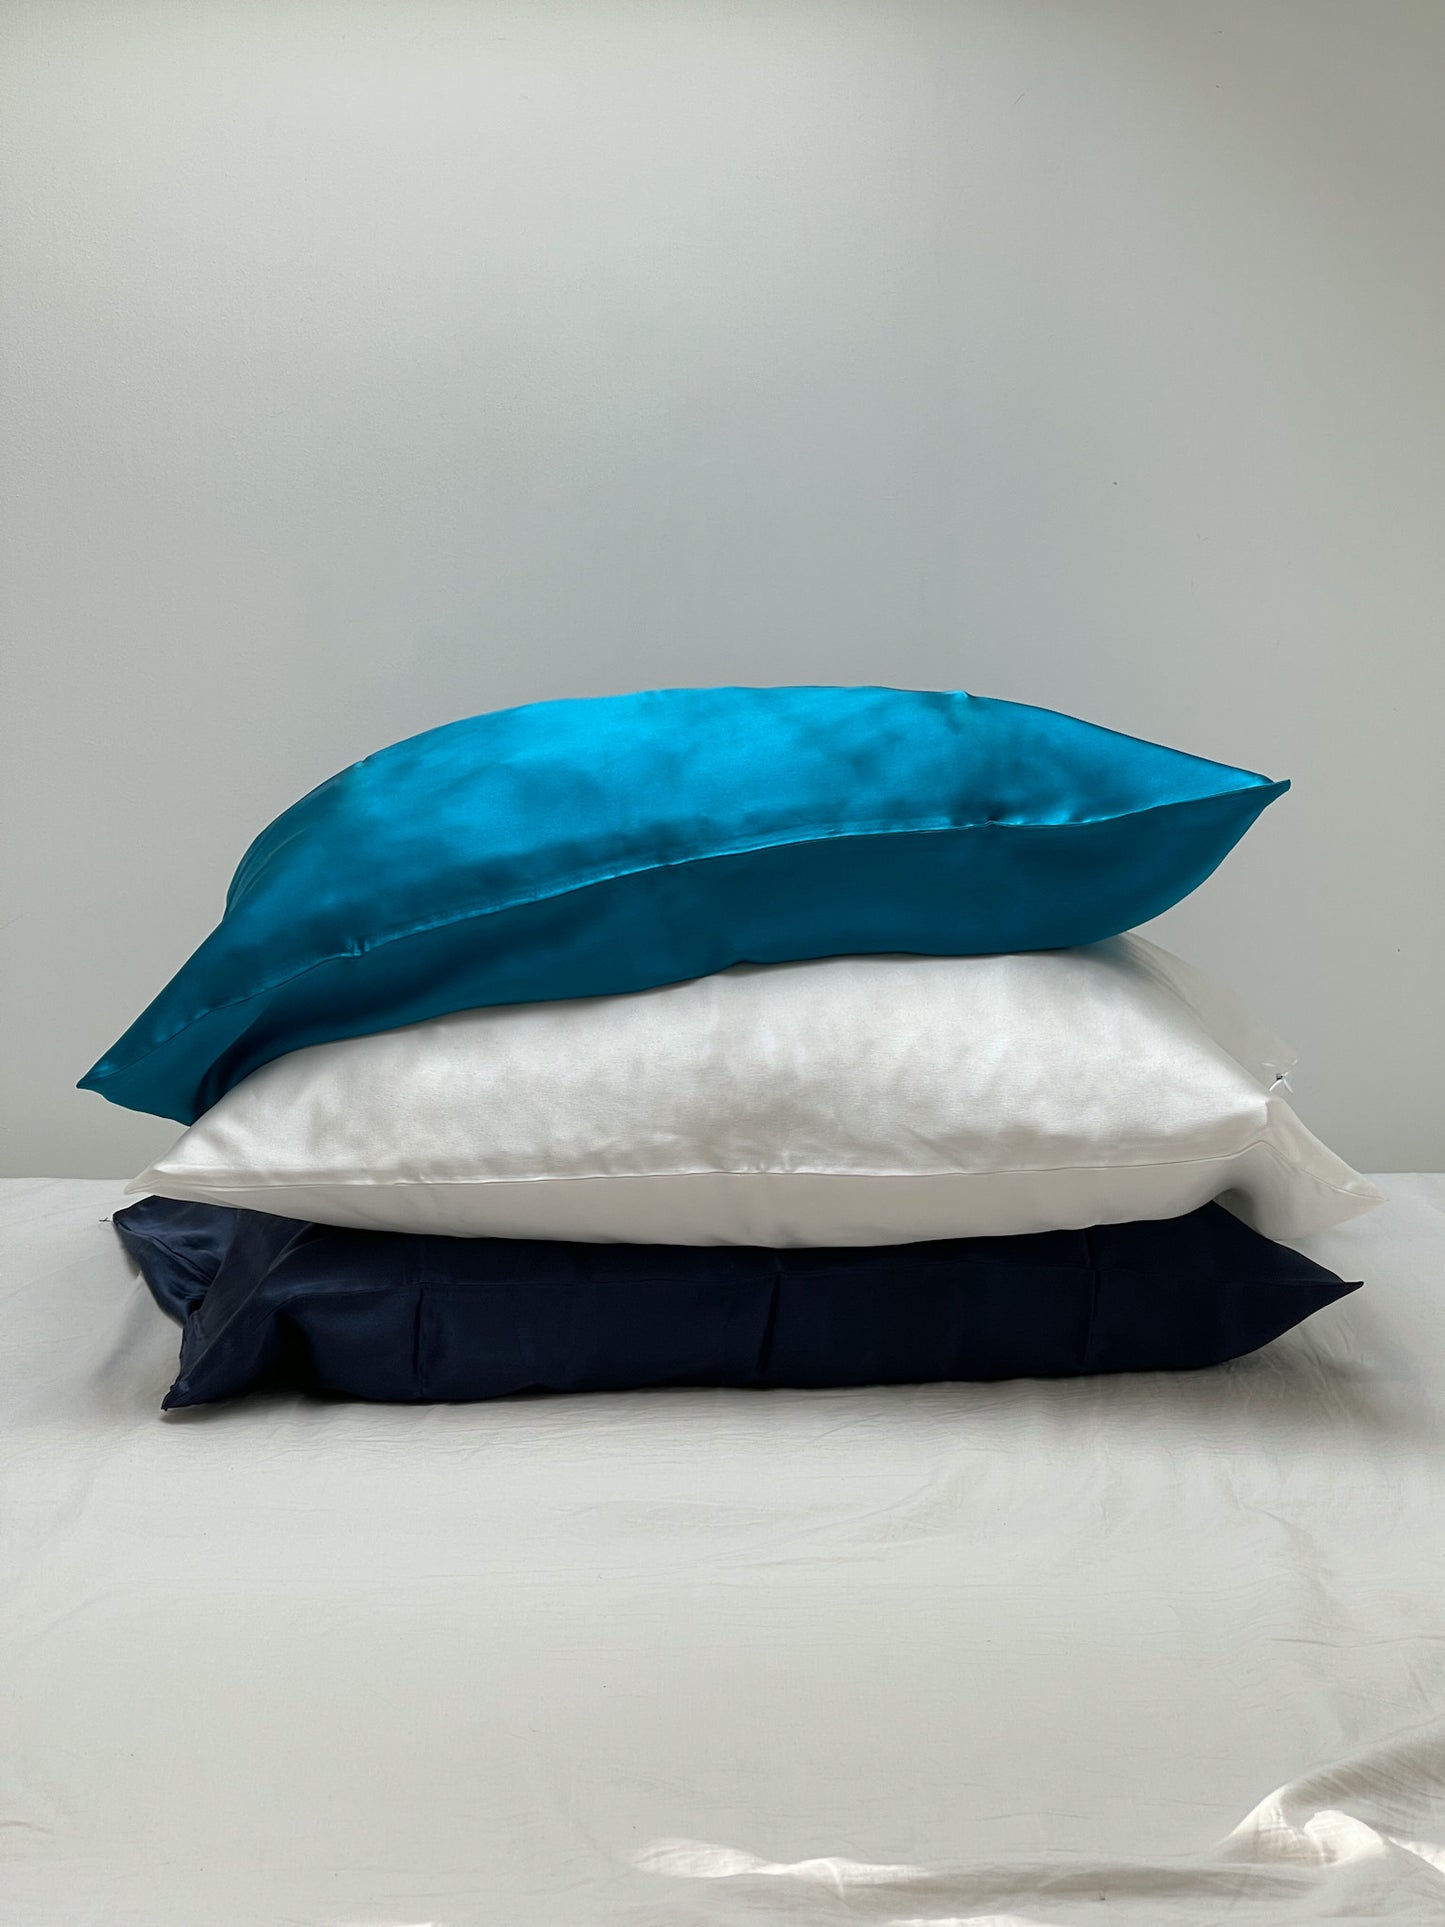 Sleepy Girl Bye Bye Acne™ Standard Pillowcase Peacock Blue